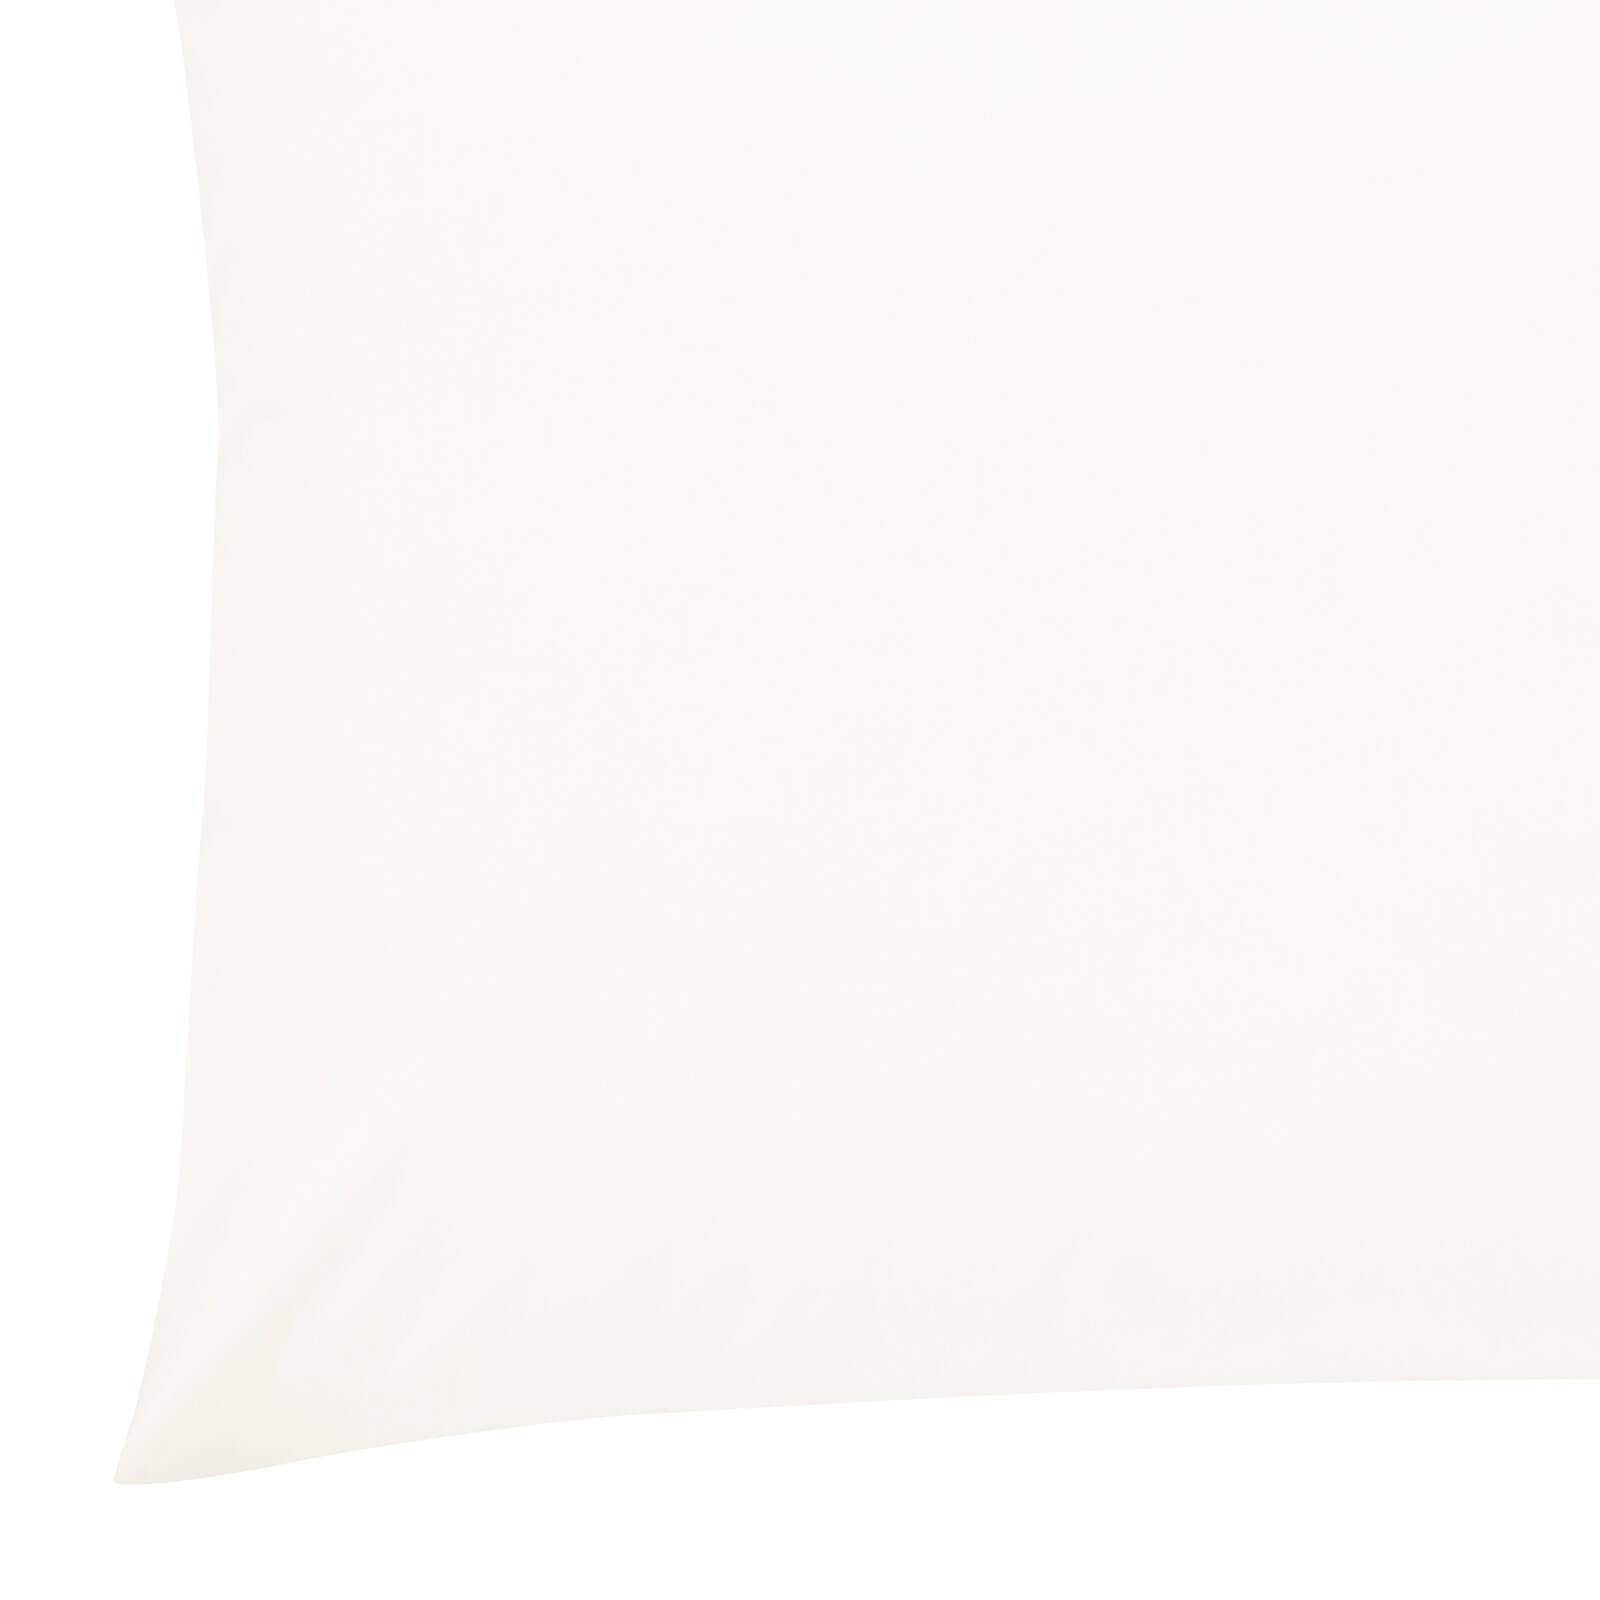 Helena Springfield Plain Dye Standard Pillowcase - Ivory